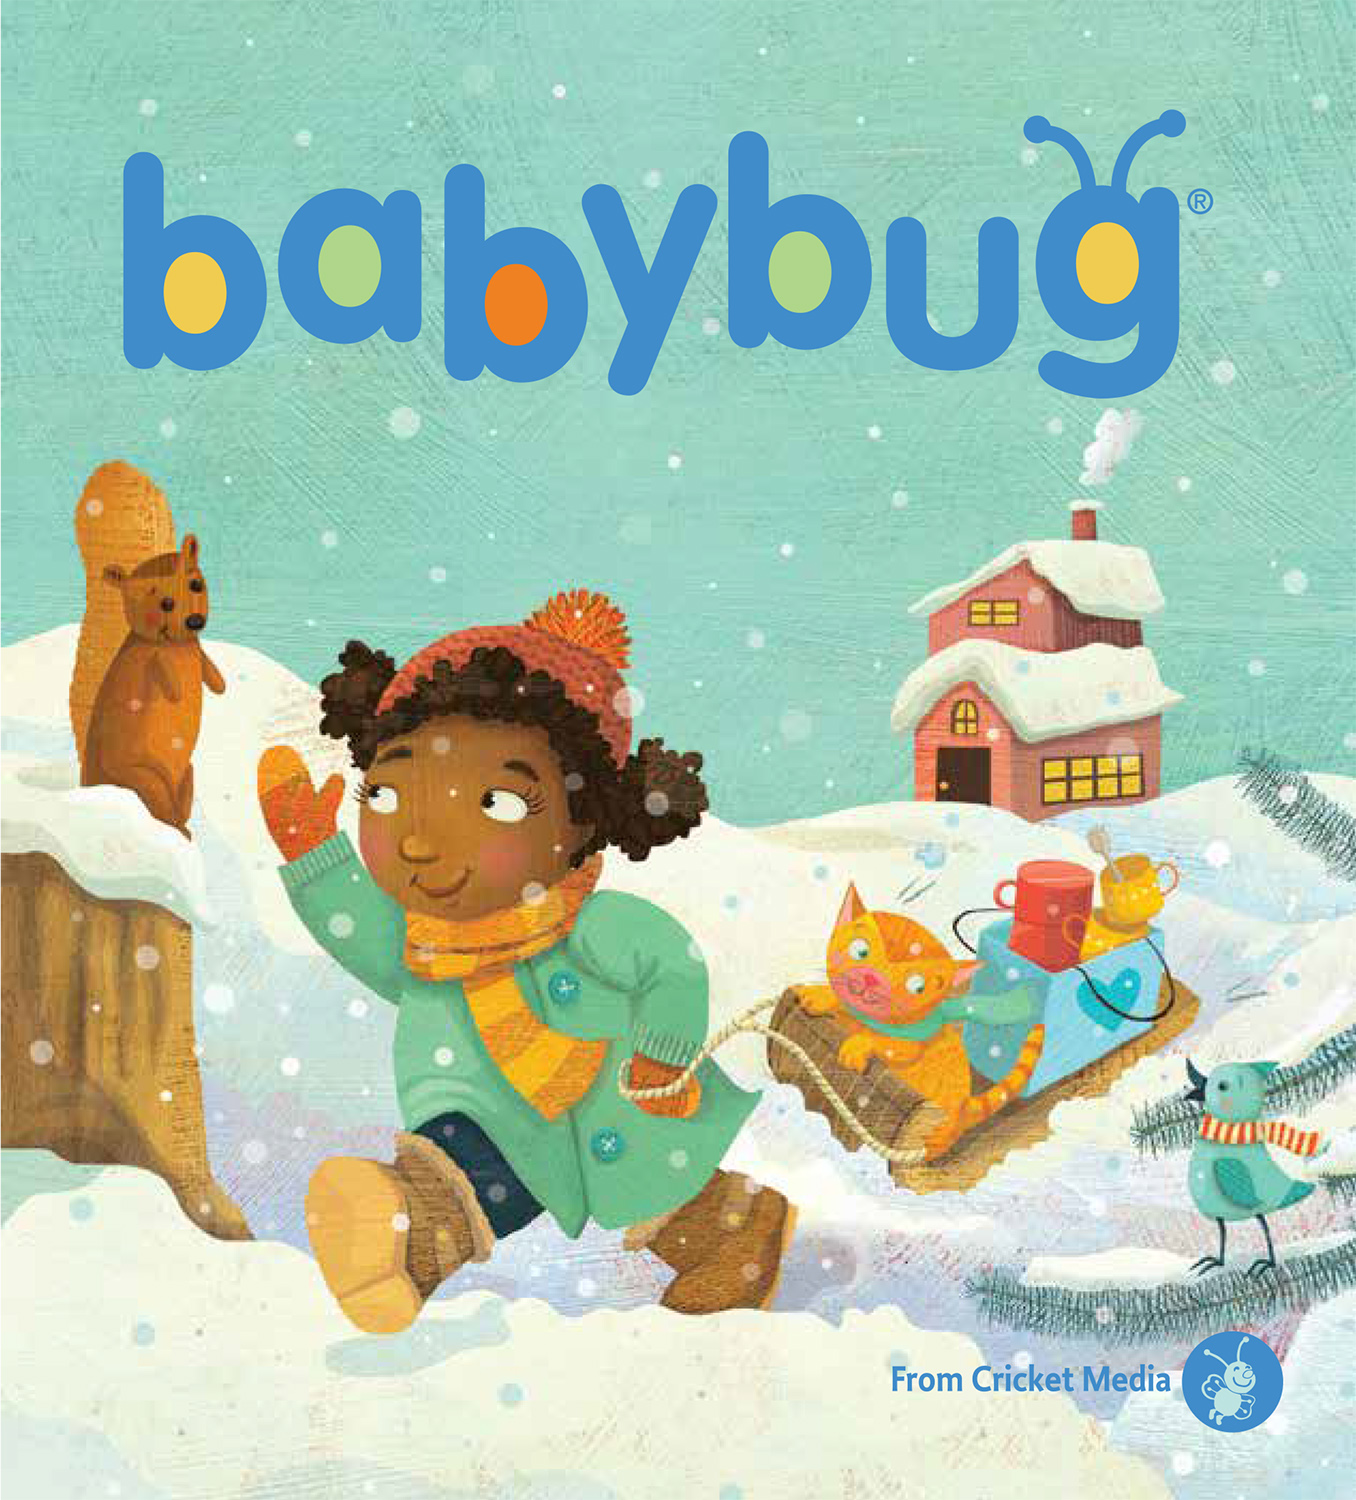 ispot_Babybug_snow_cover1.jpg